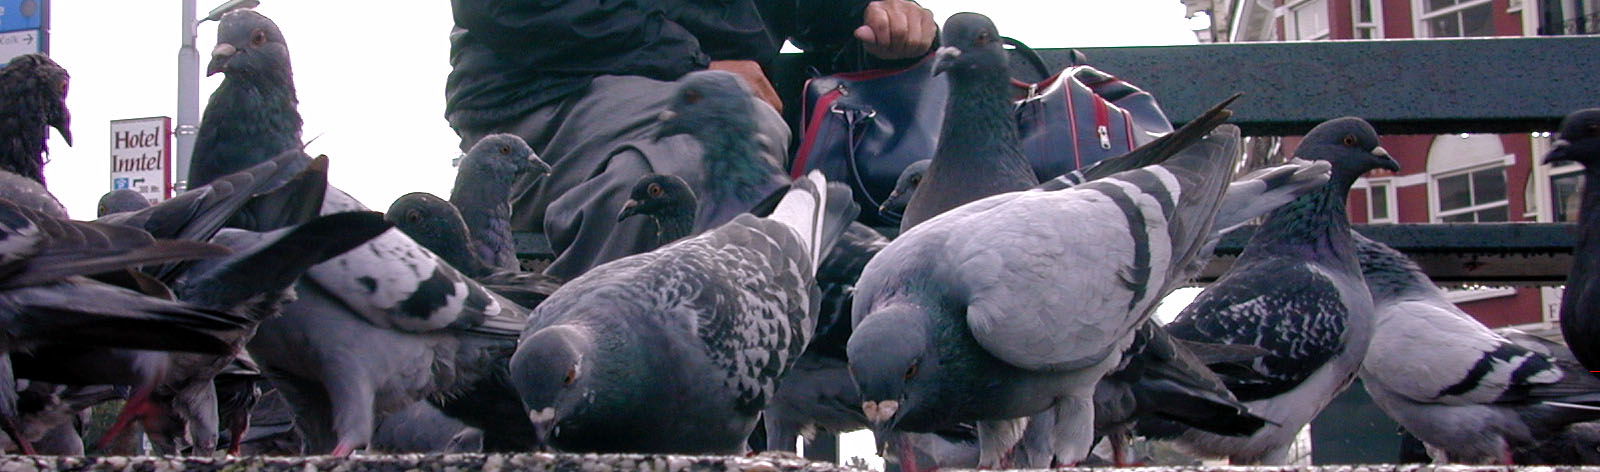 pigeons doves red eye grey black flock feeding